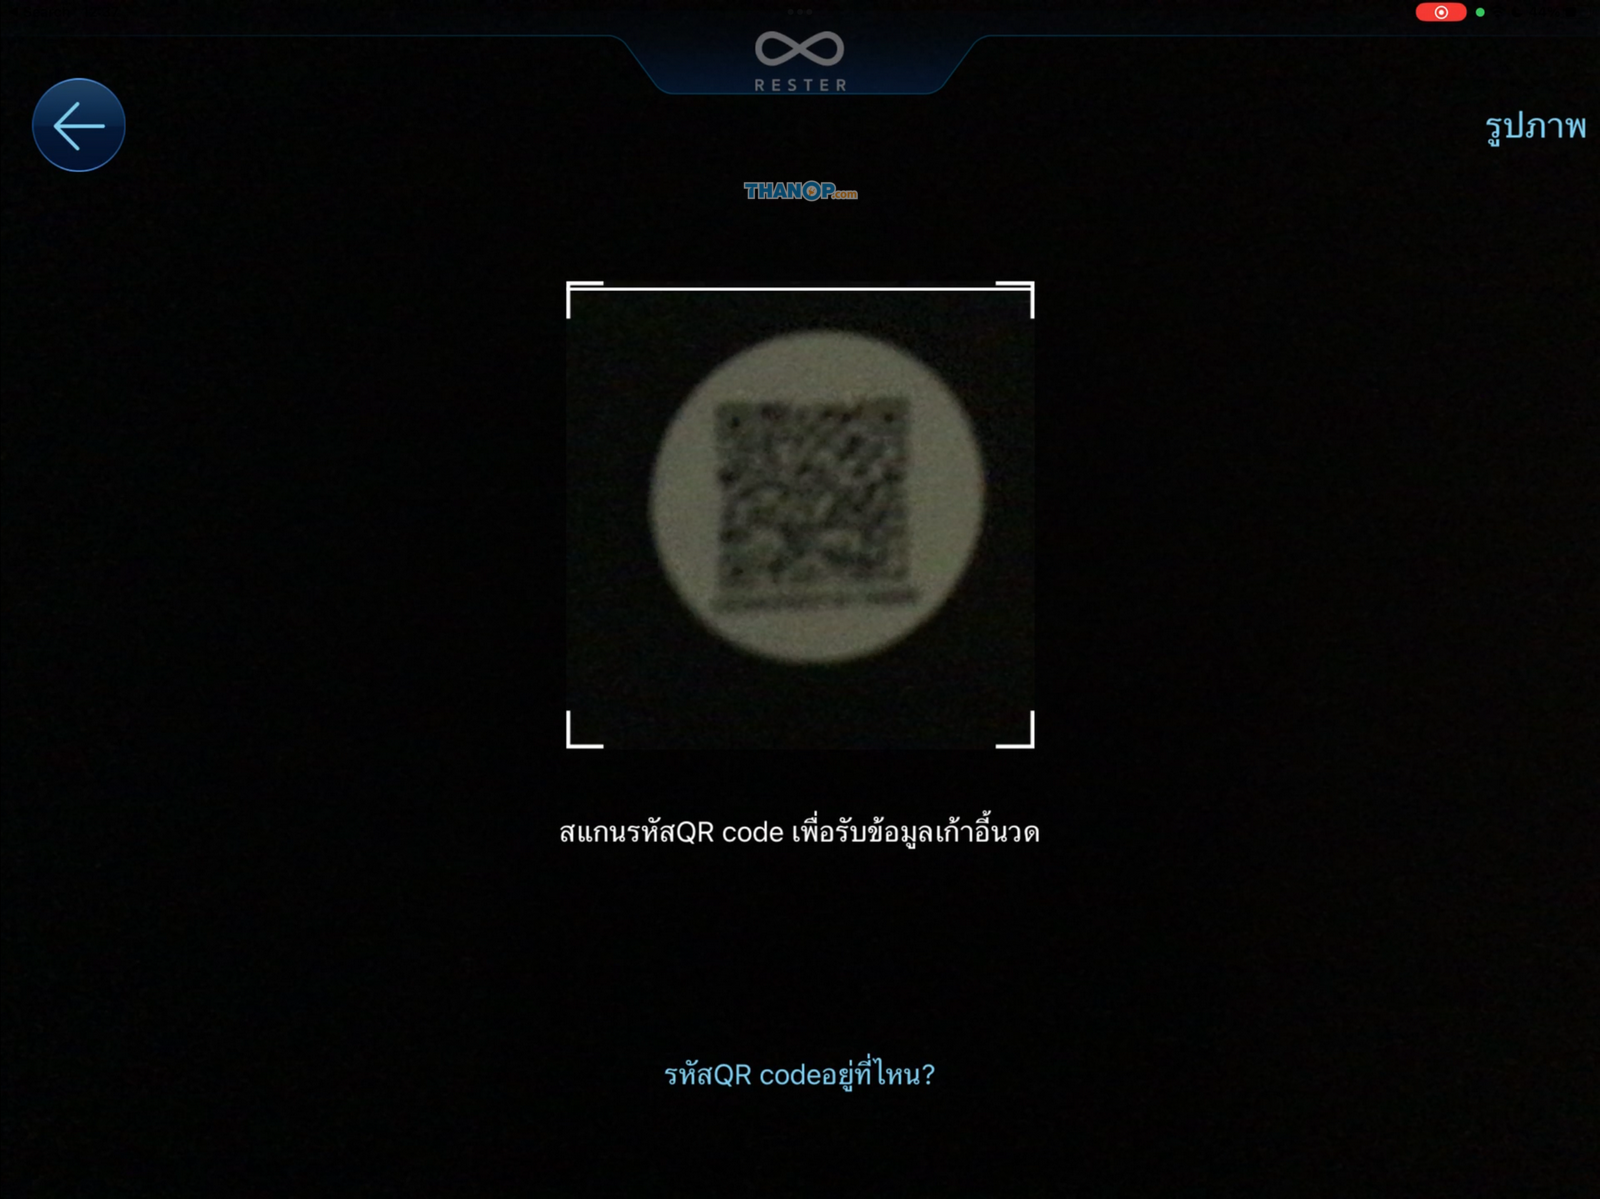 rester-ai-pro-app-interface-qr-code-scanning